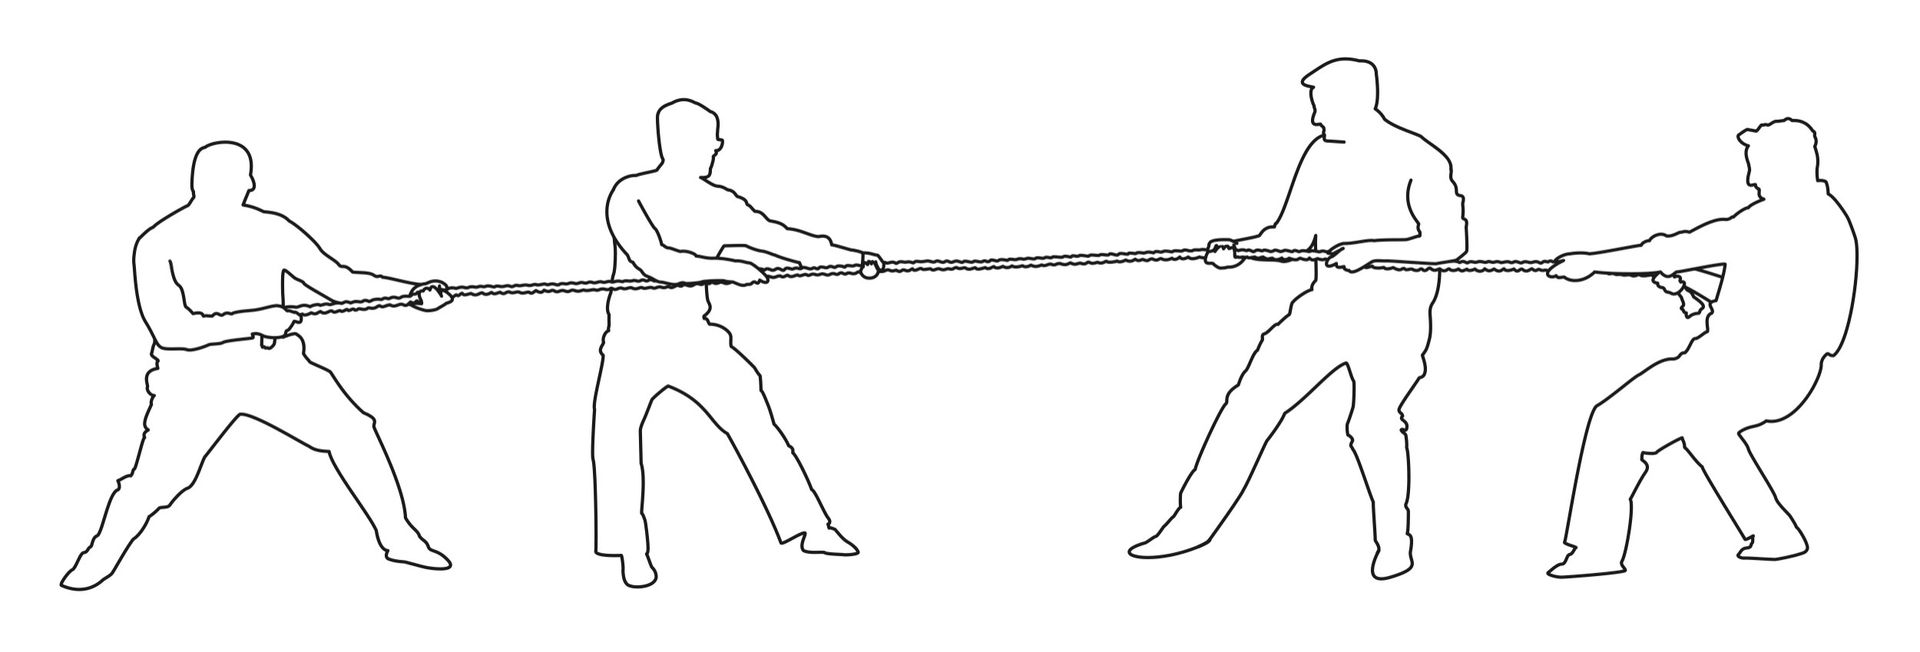 An illustration of figures playing tug-of-war.